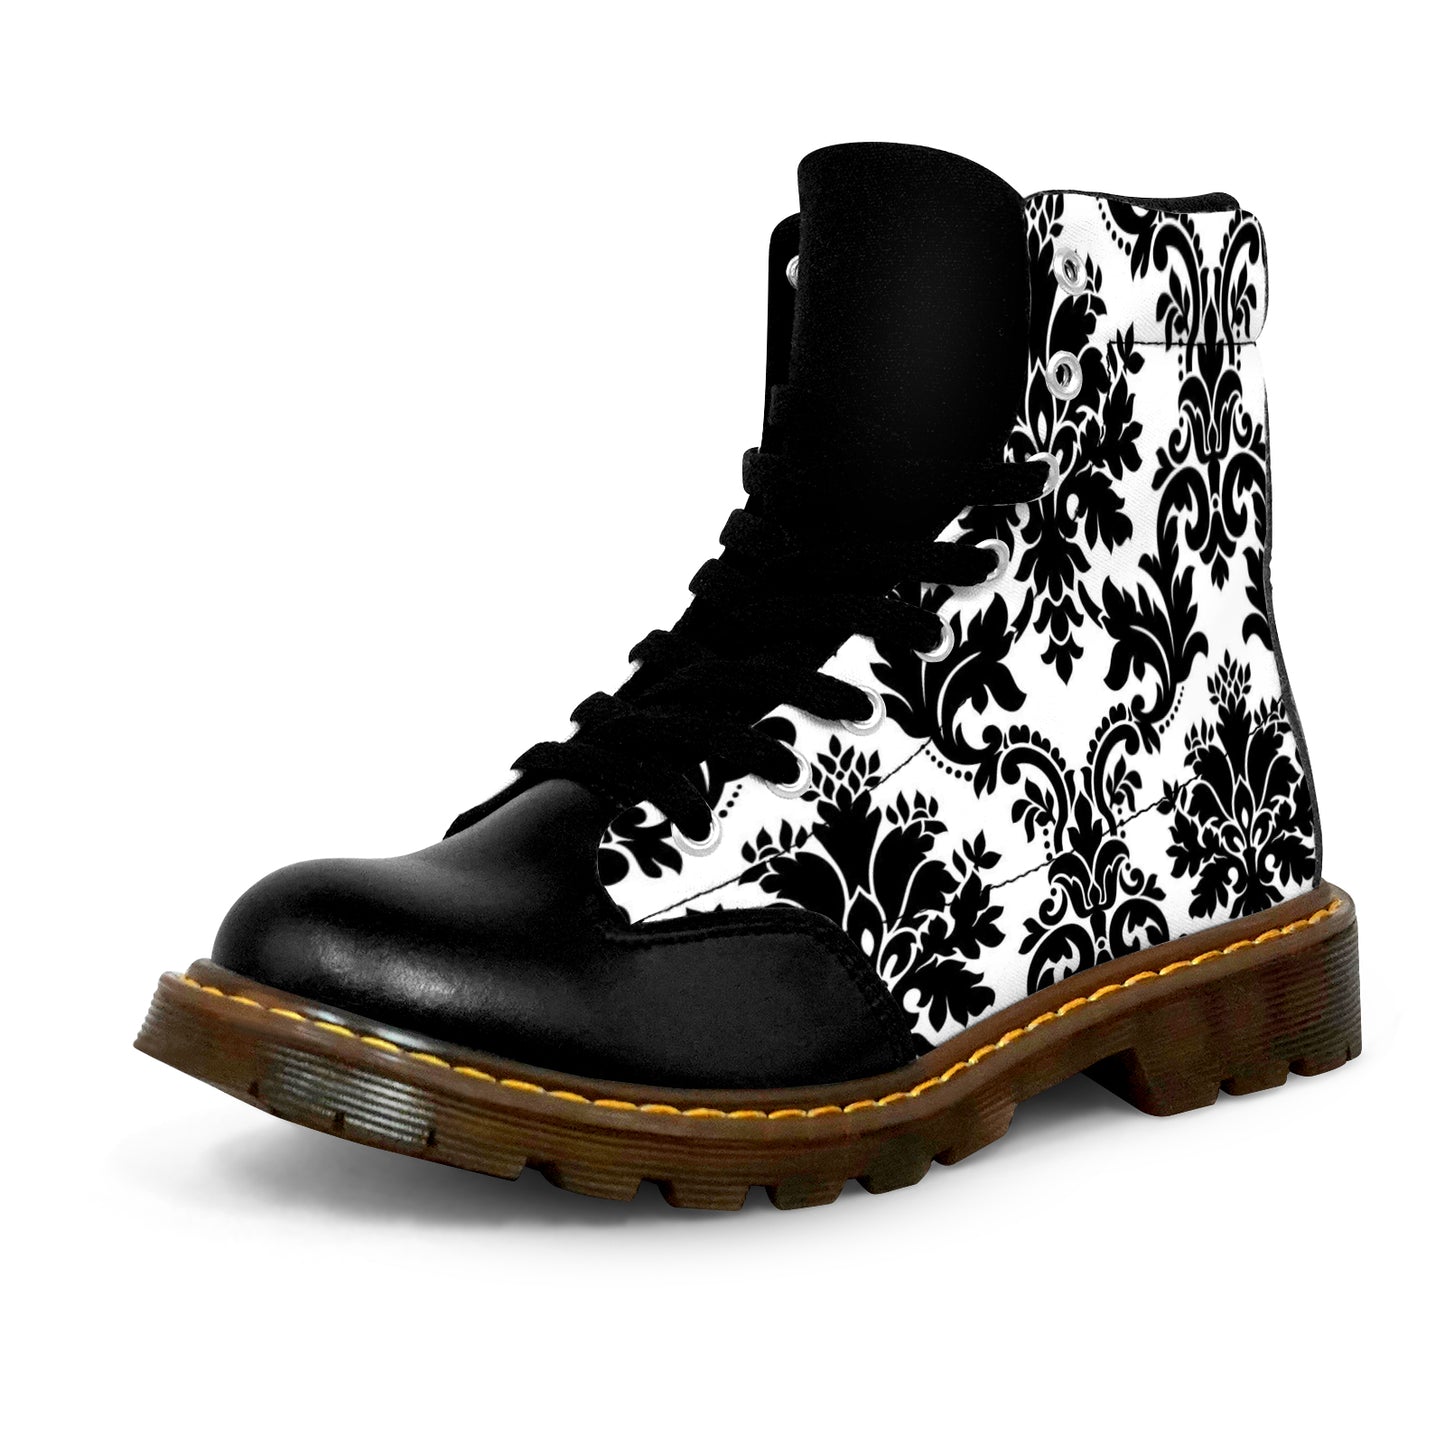 Winter Round Toe Women's Boots - Black/White